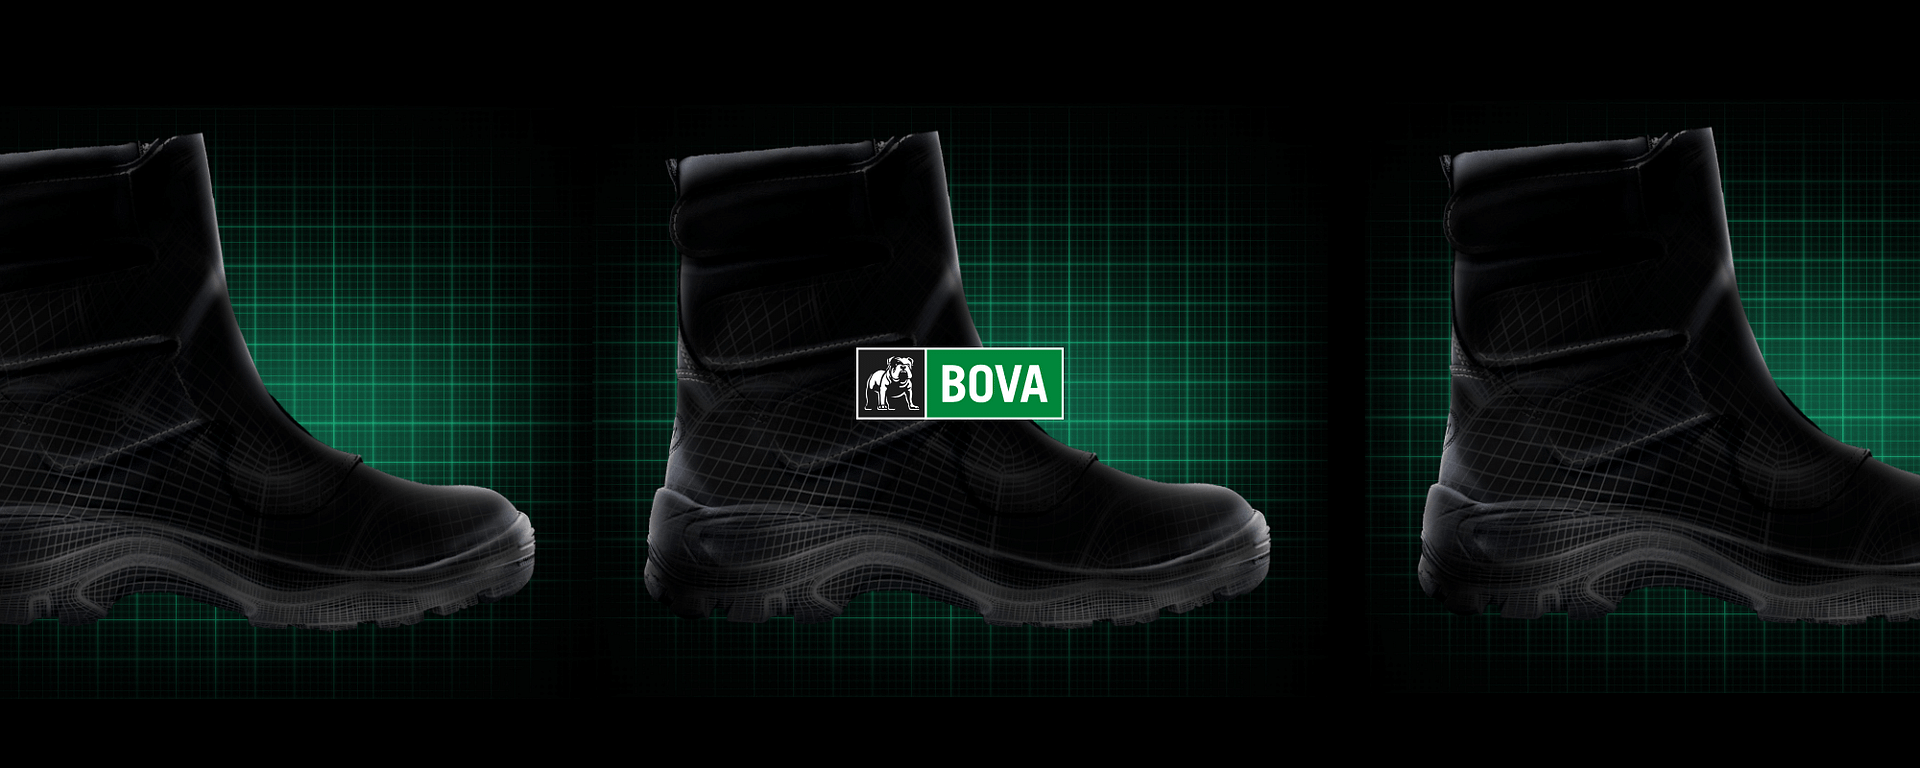 BOVA Safety Boots